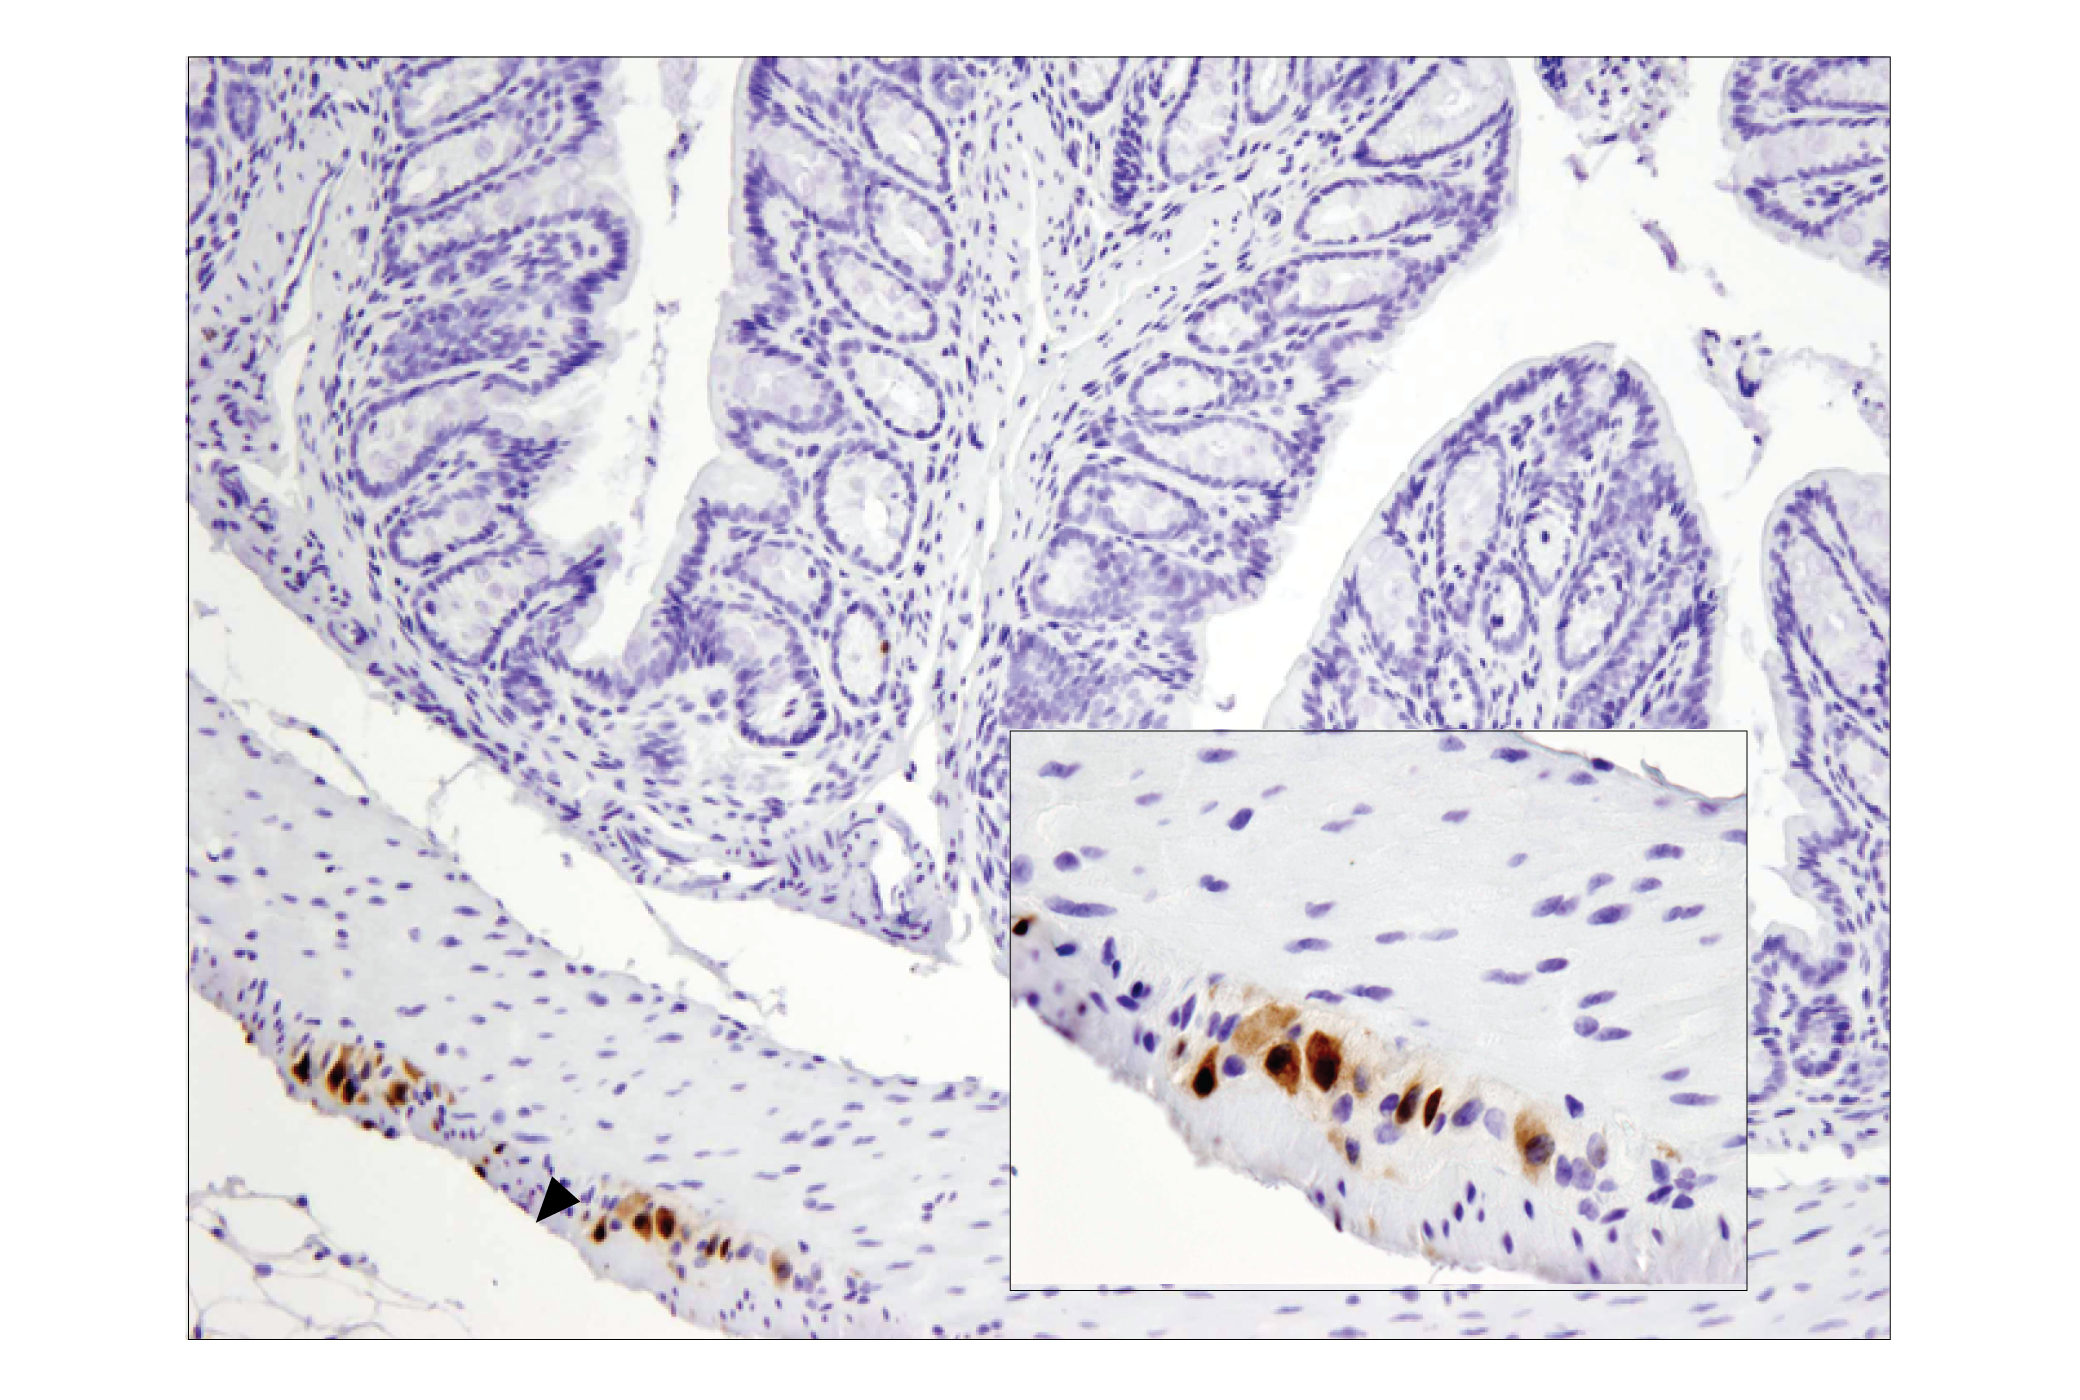  Image 31: Mature Neuron Marker Antibody Sampler Kit